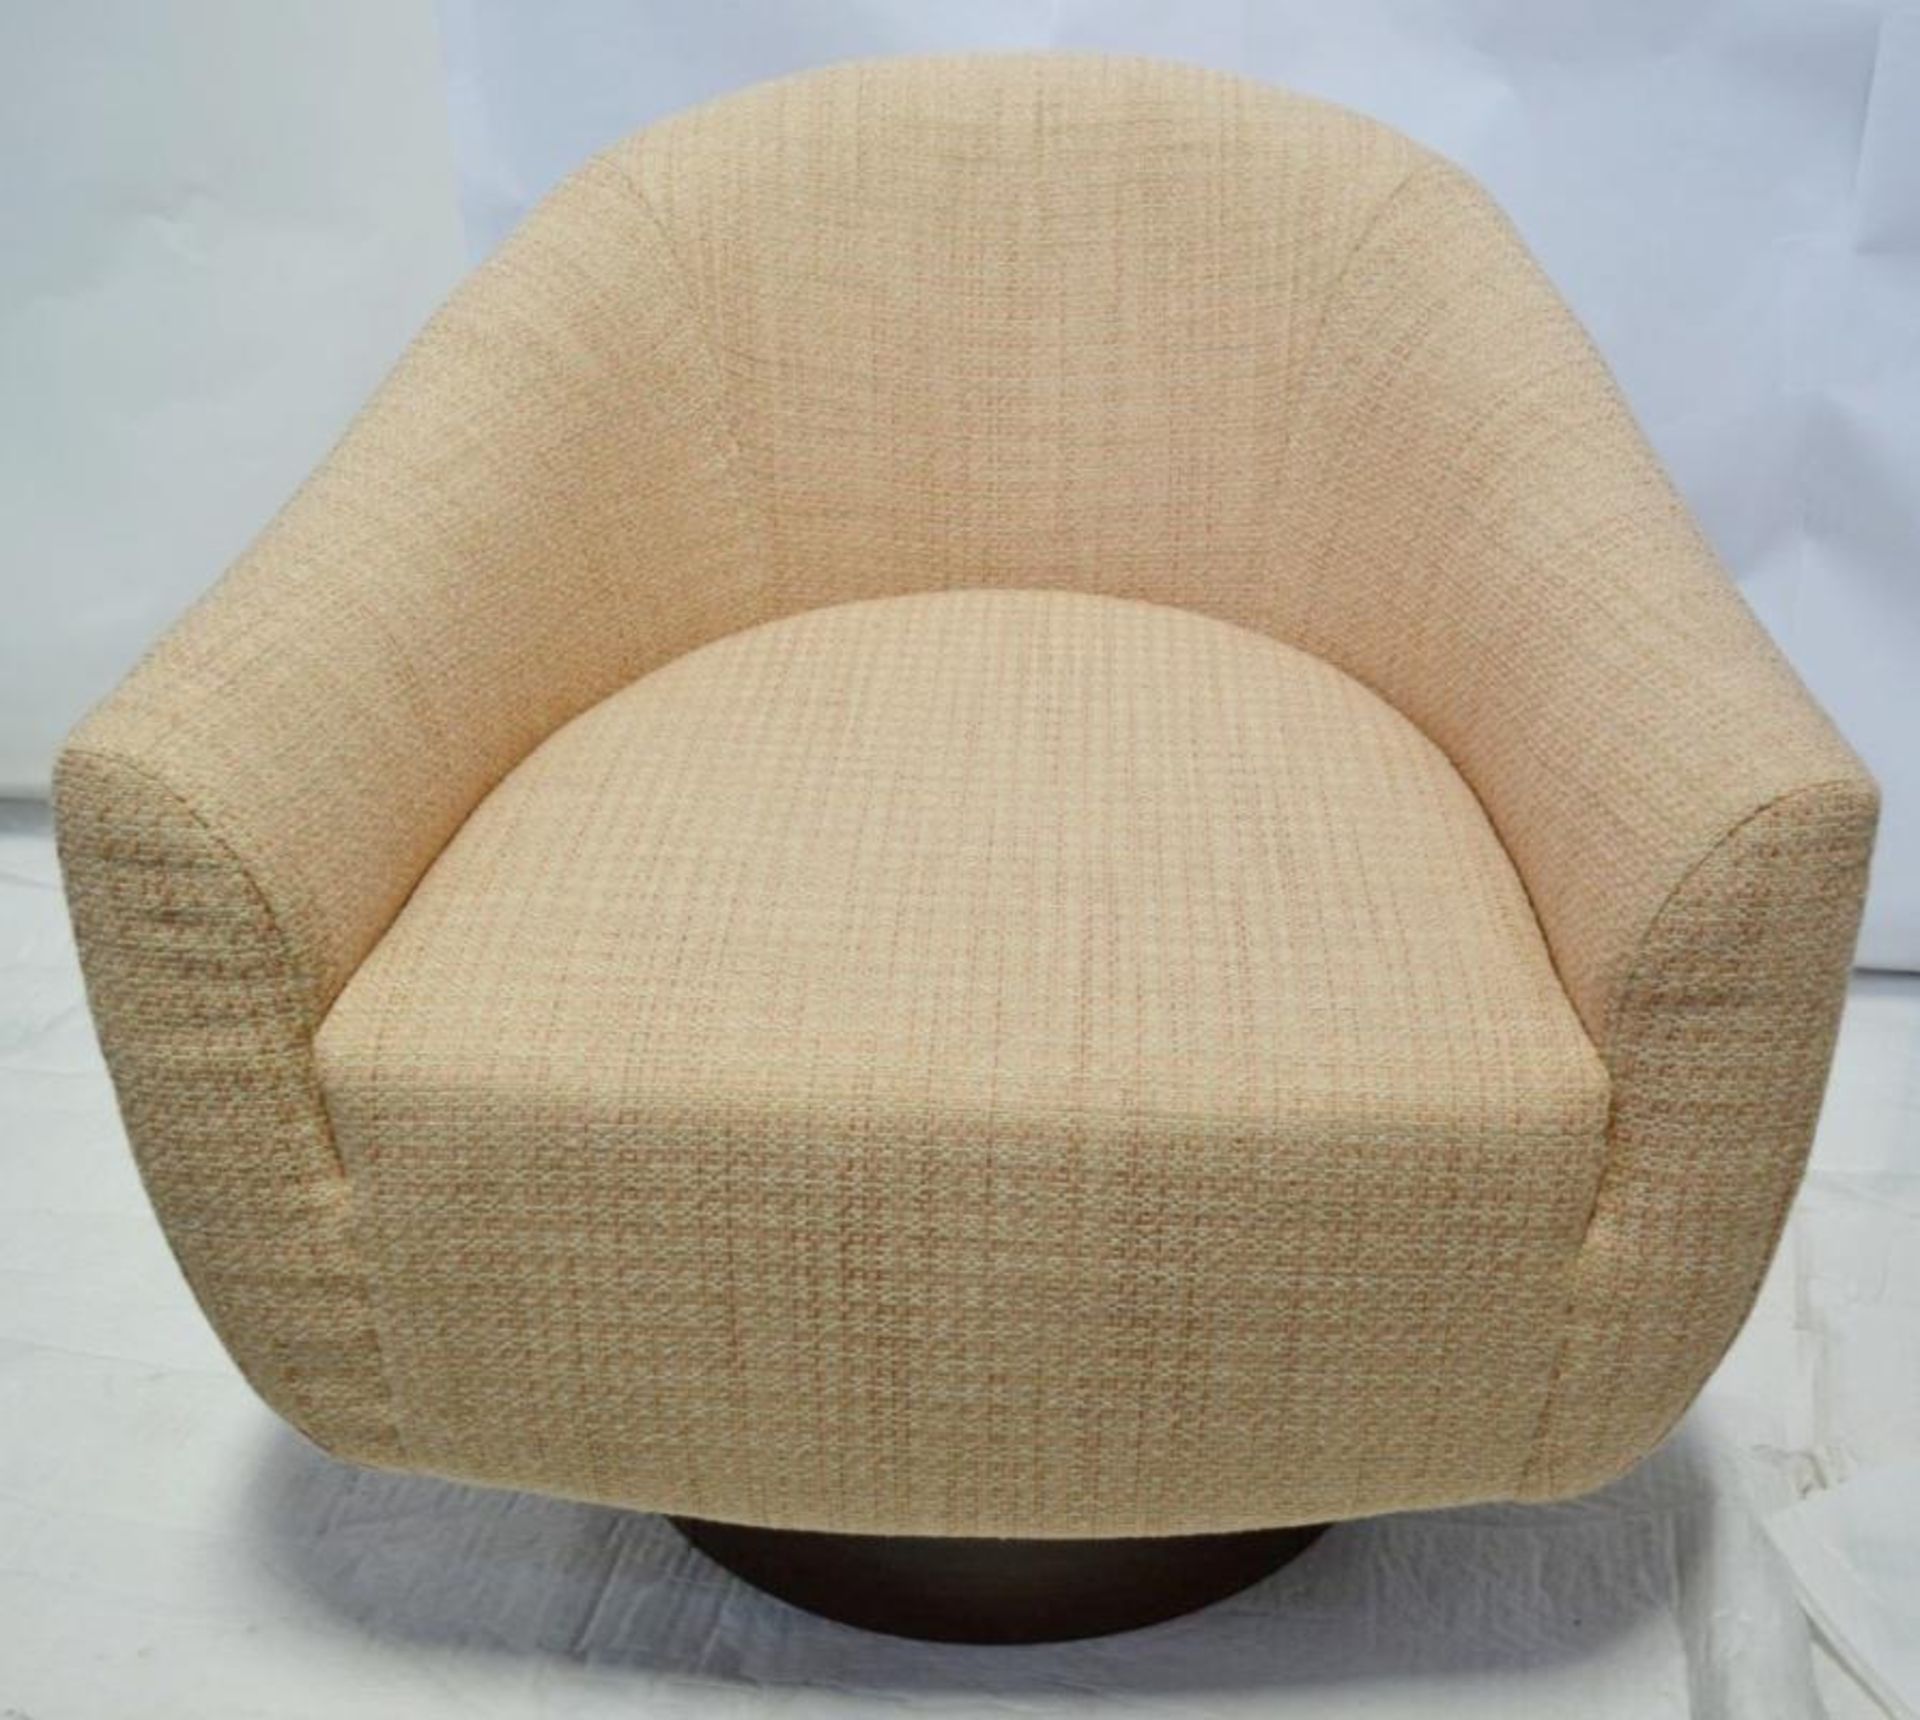 1 x KELLY WEARSTLER Sonara Swivel Chair Rosewood - Dimensions: 31” W x 35” D x 31” H - Ex-Display In - Image 12 of 28